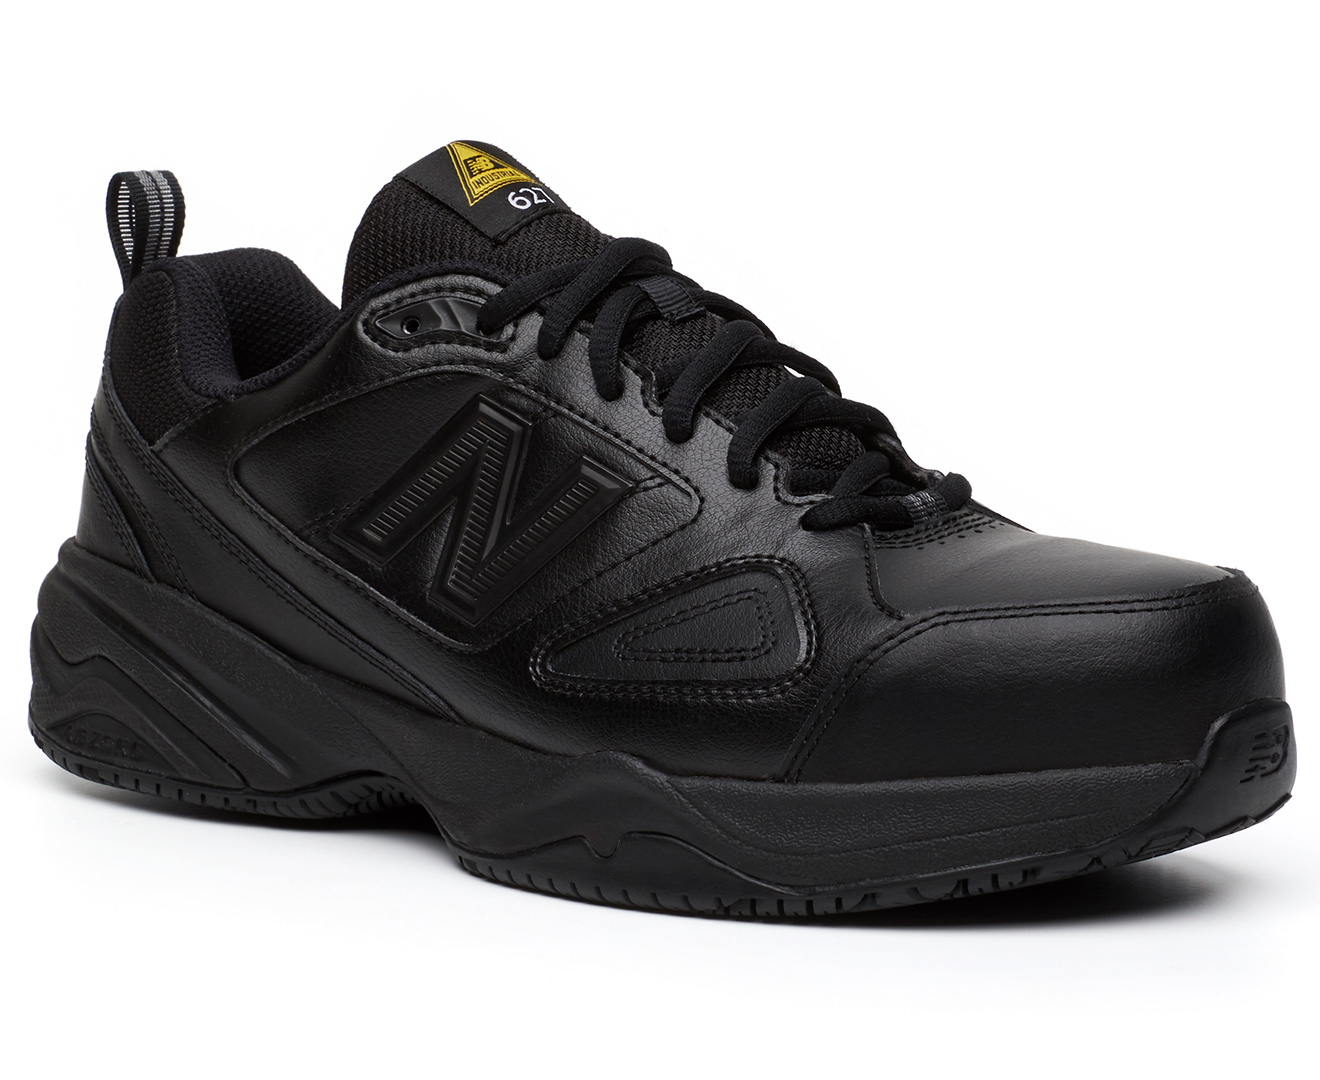 New Balance Men's Mid 627v2 Wide Fit Safety Shoes - Black | Catch.co.nz